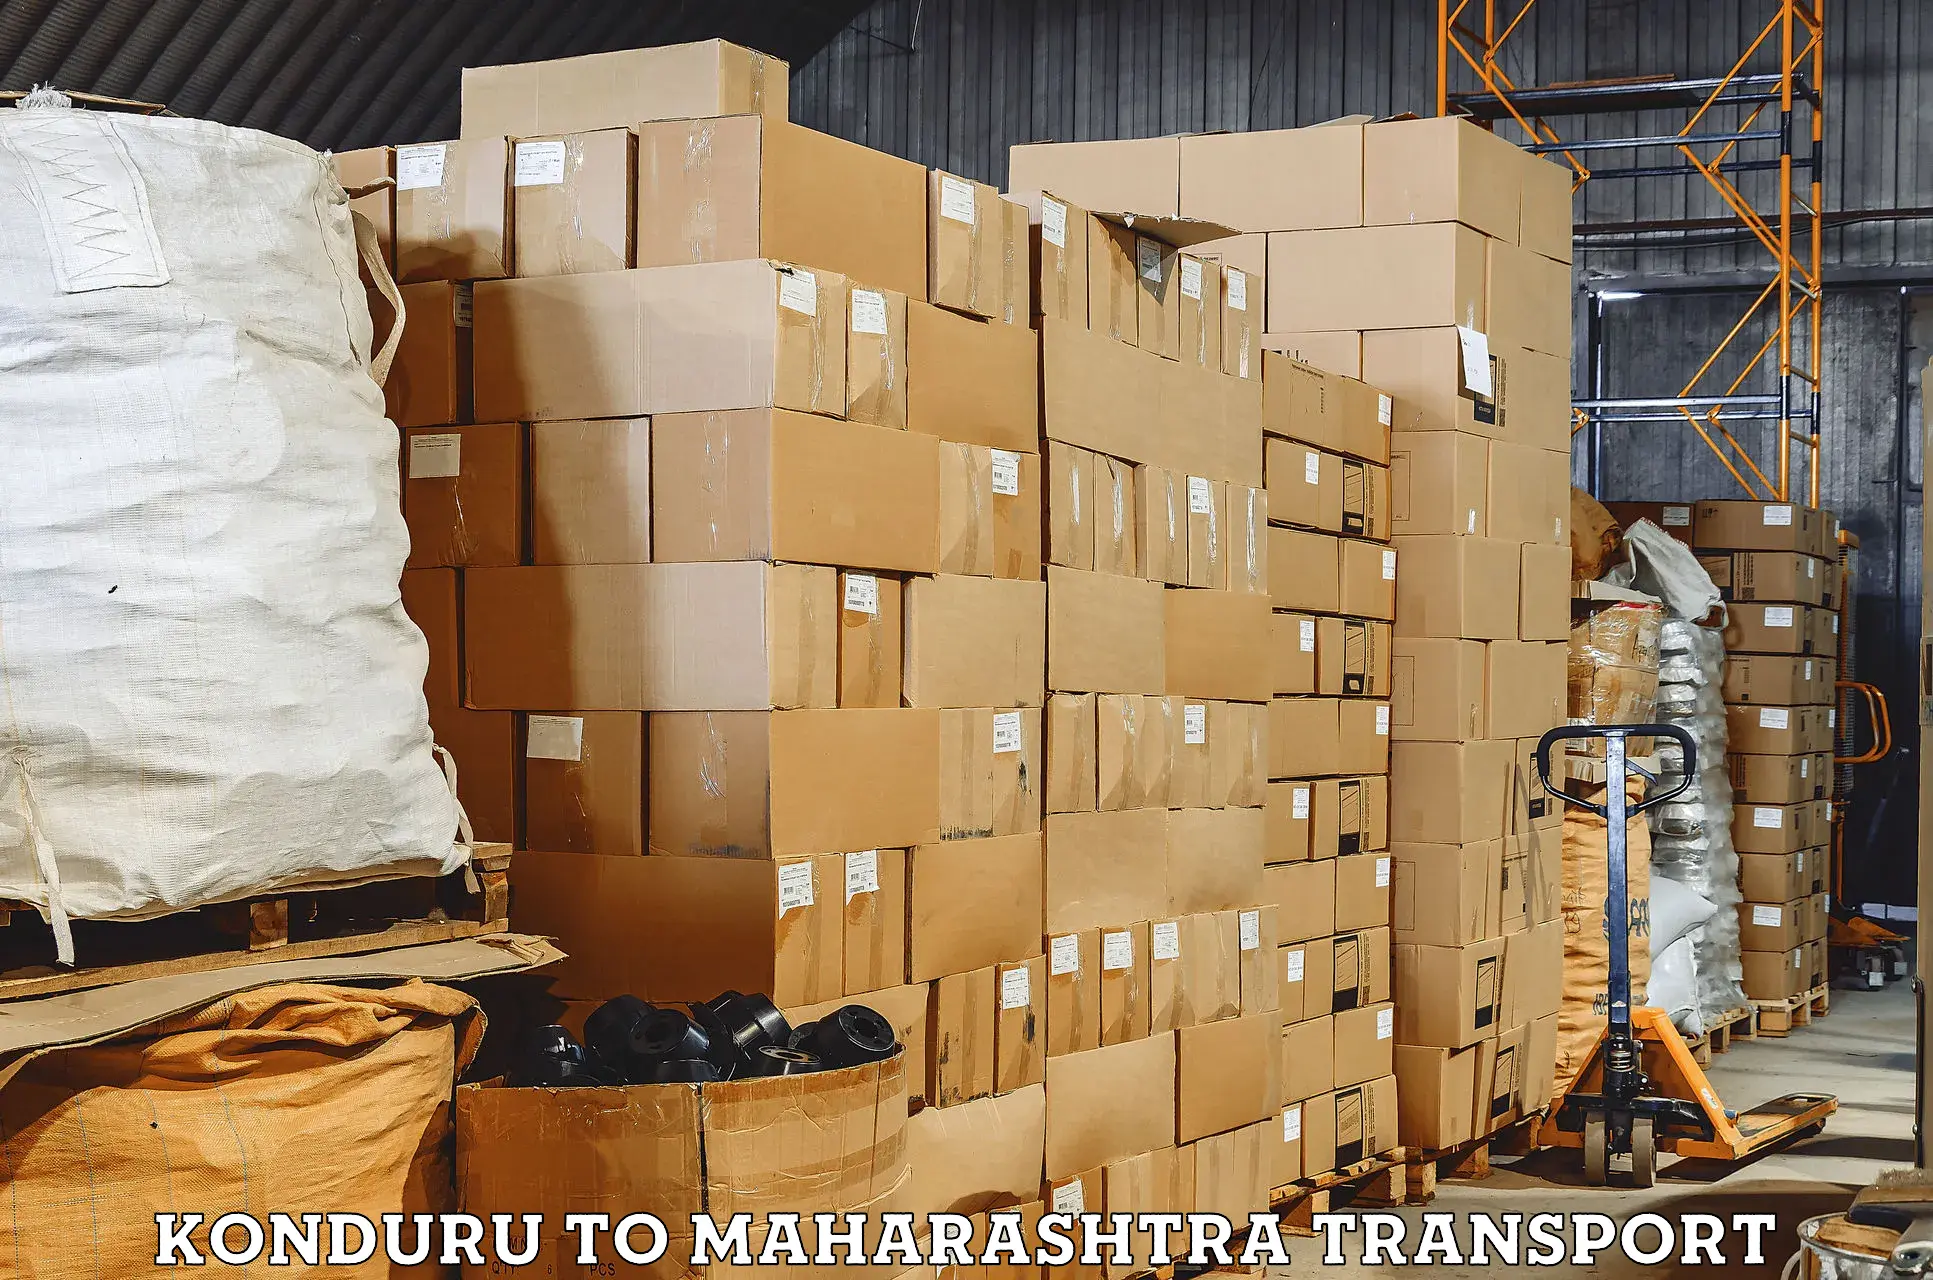 Transport bike from one state to another Konduru to Maharashtra